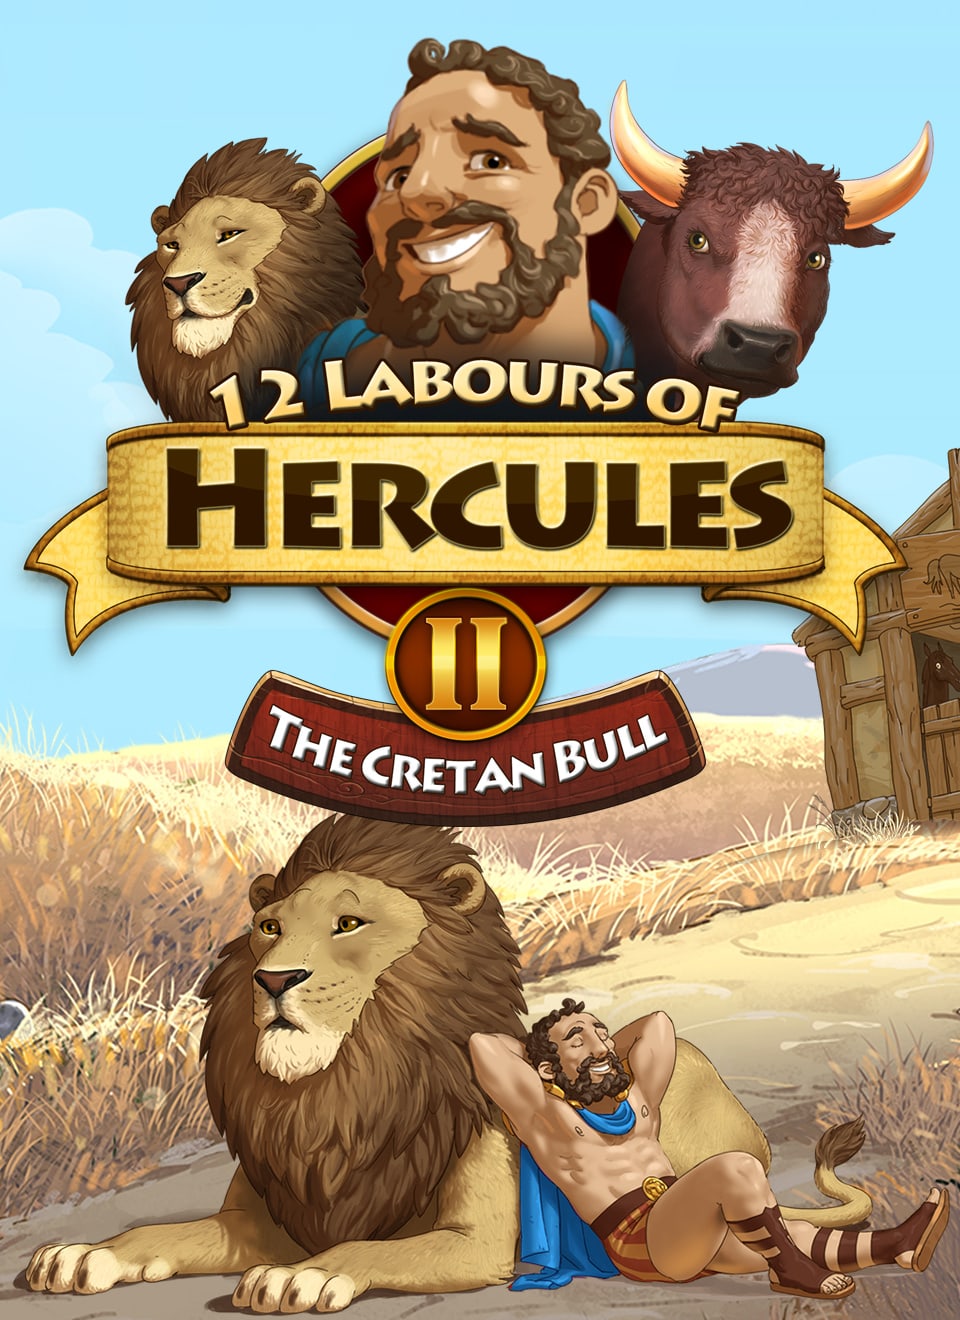 jaquette du jeu vidéo 12 Labours of Hercules II: The Cretan Bull